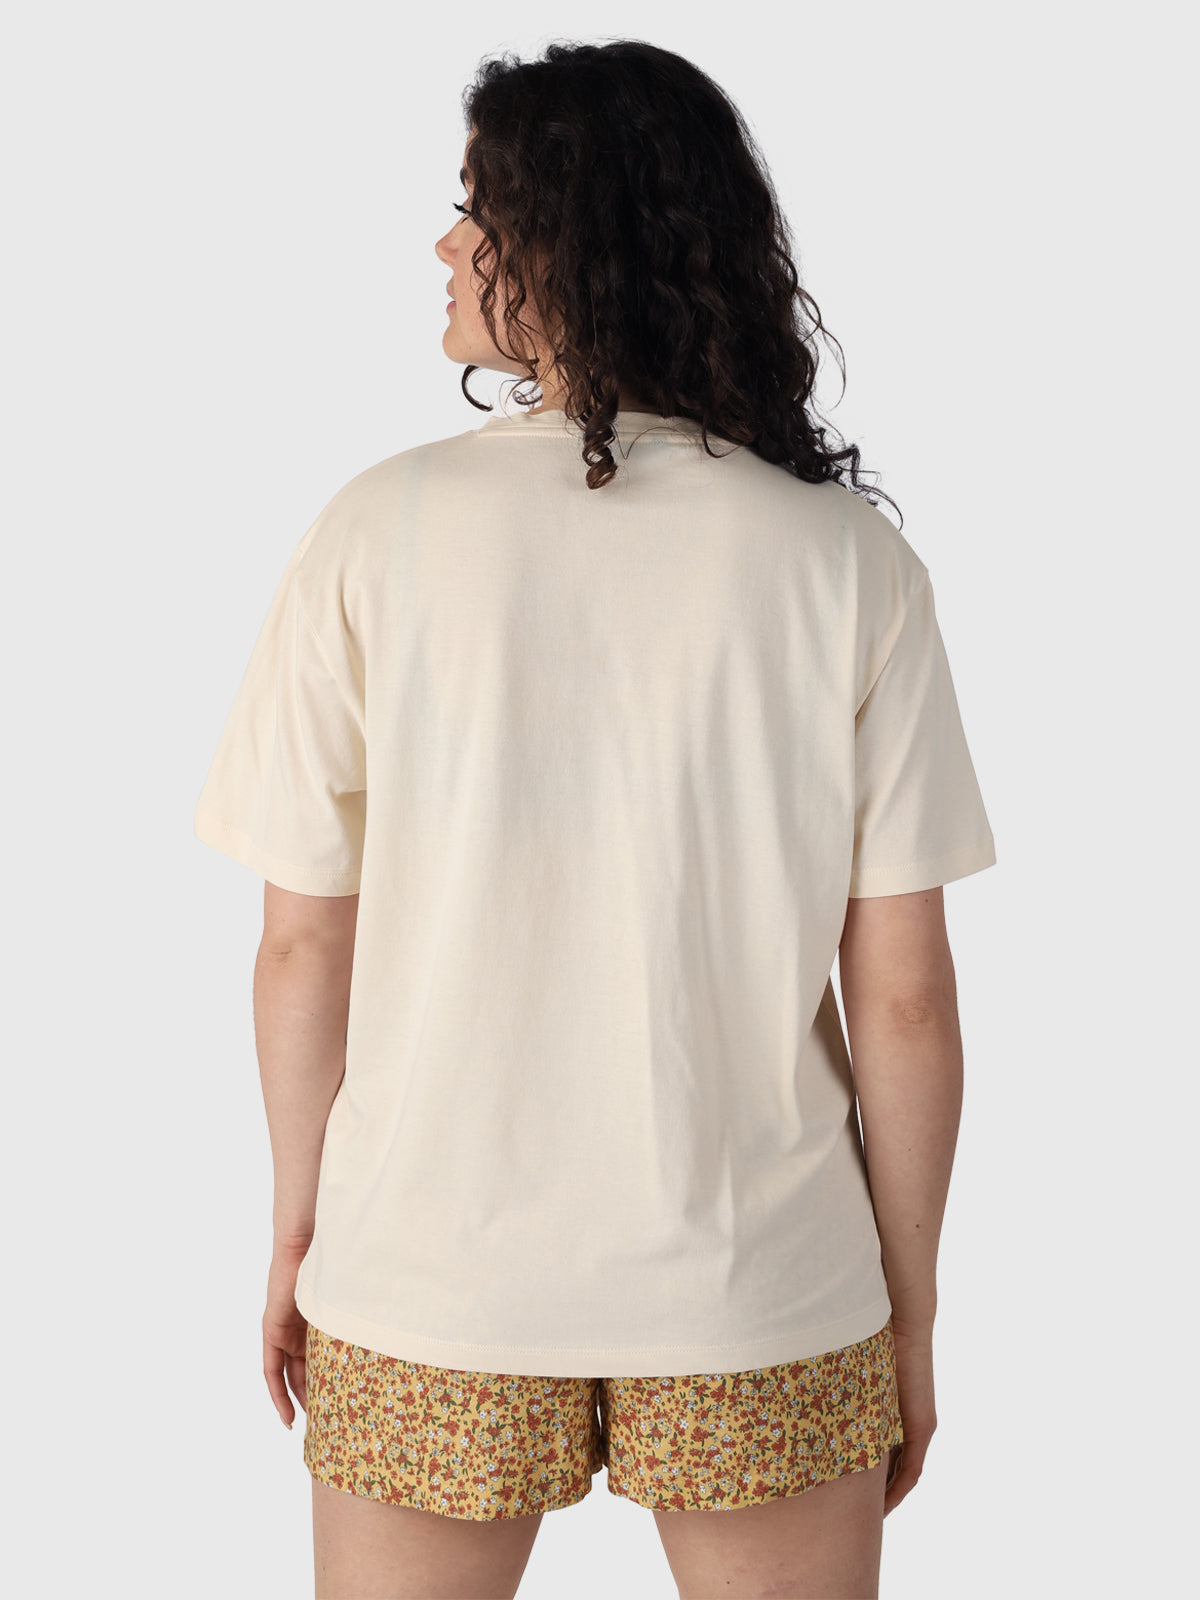 Imani-R Women T-Shirt | White